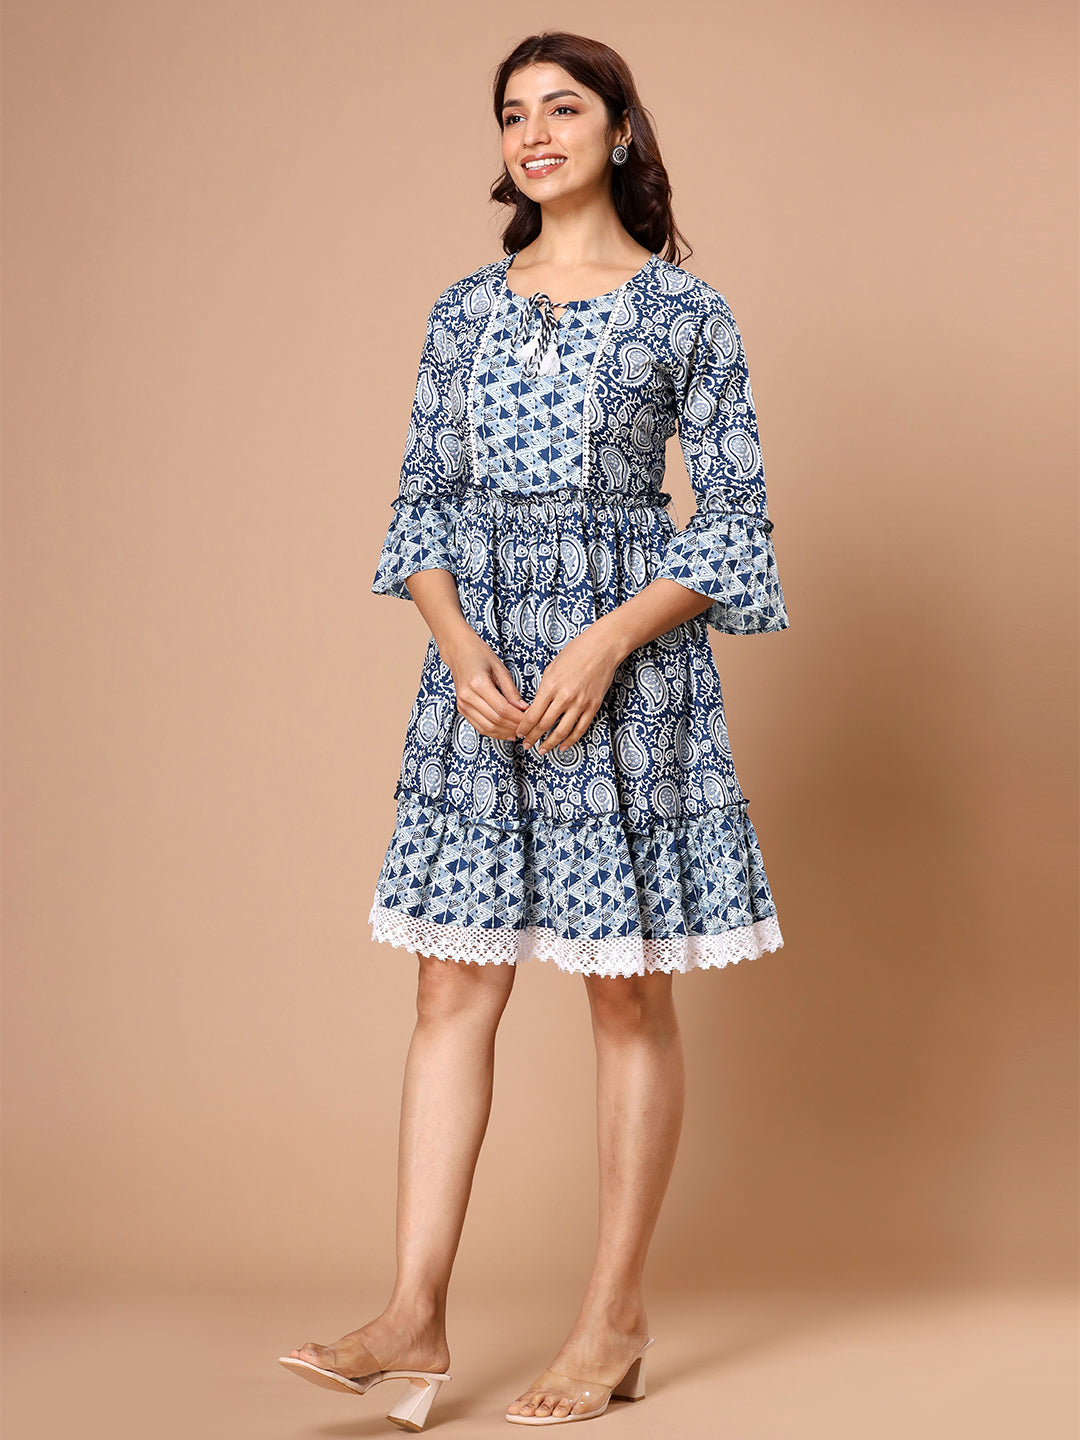 Cotton Printed Navy Blue Ethnic Motifs Dress